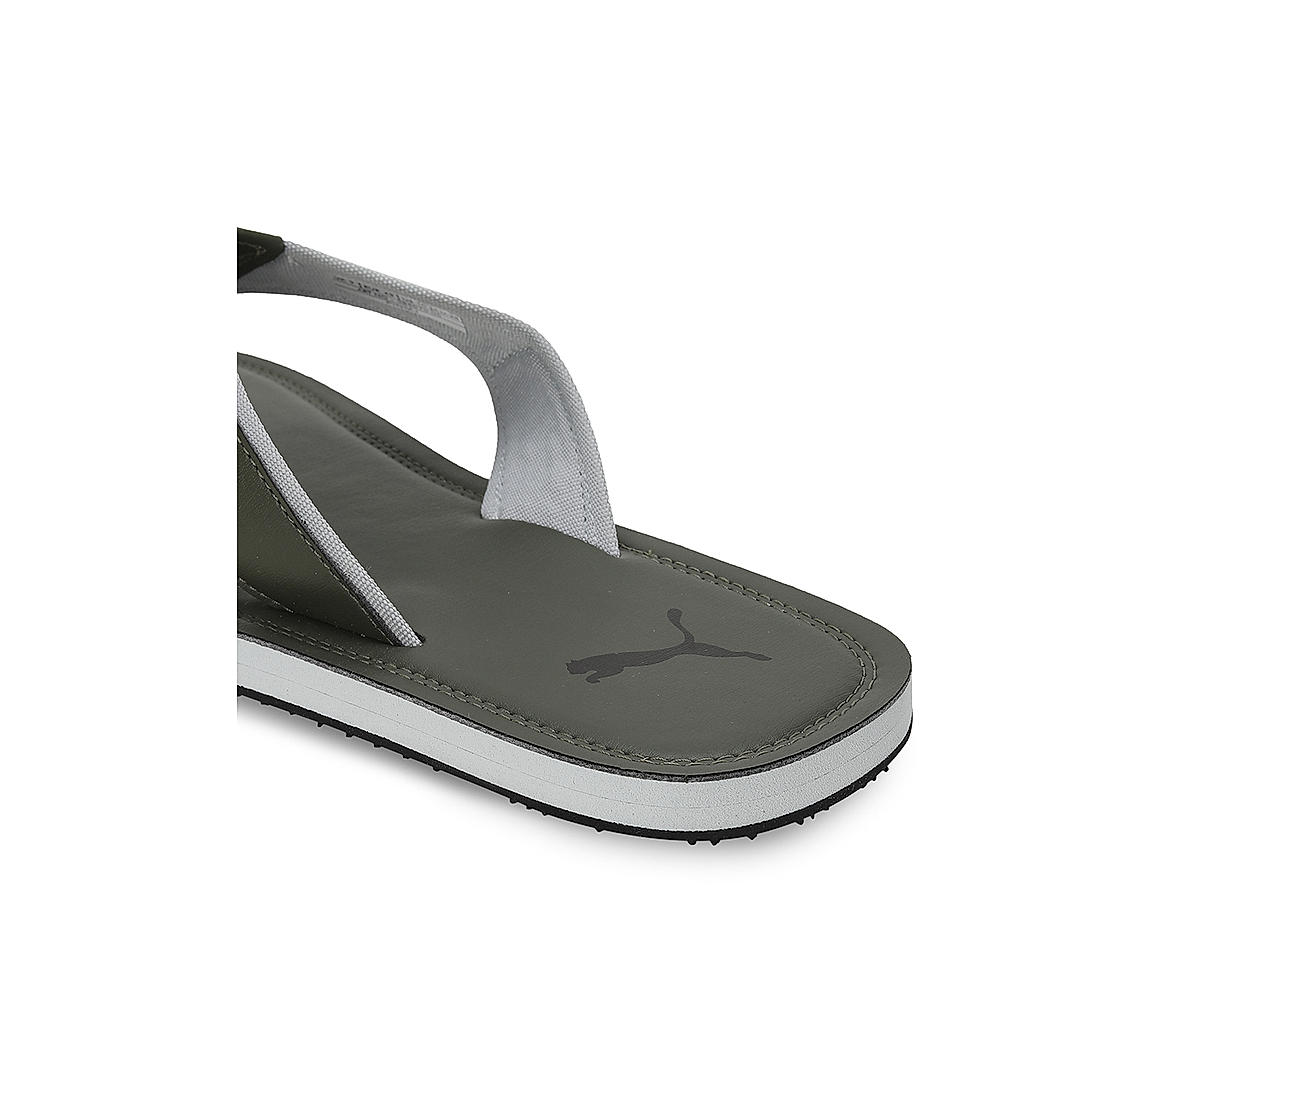 Puma Soft Ride Slide Men's Slippers Classic Comfort Everyday White  382112-09 | eBay